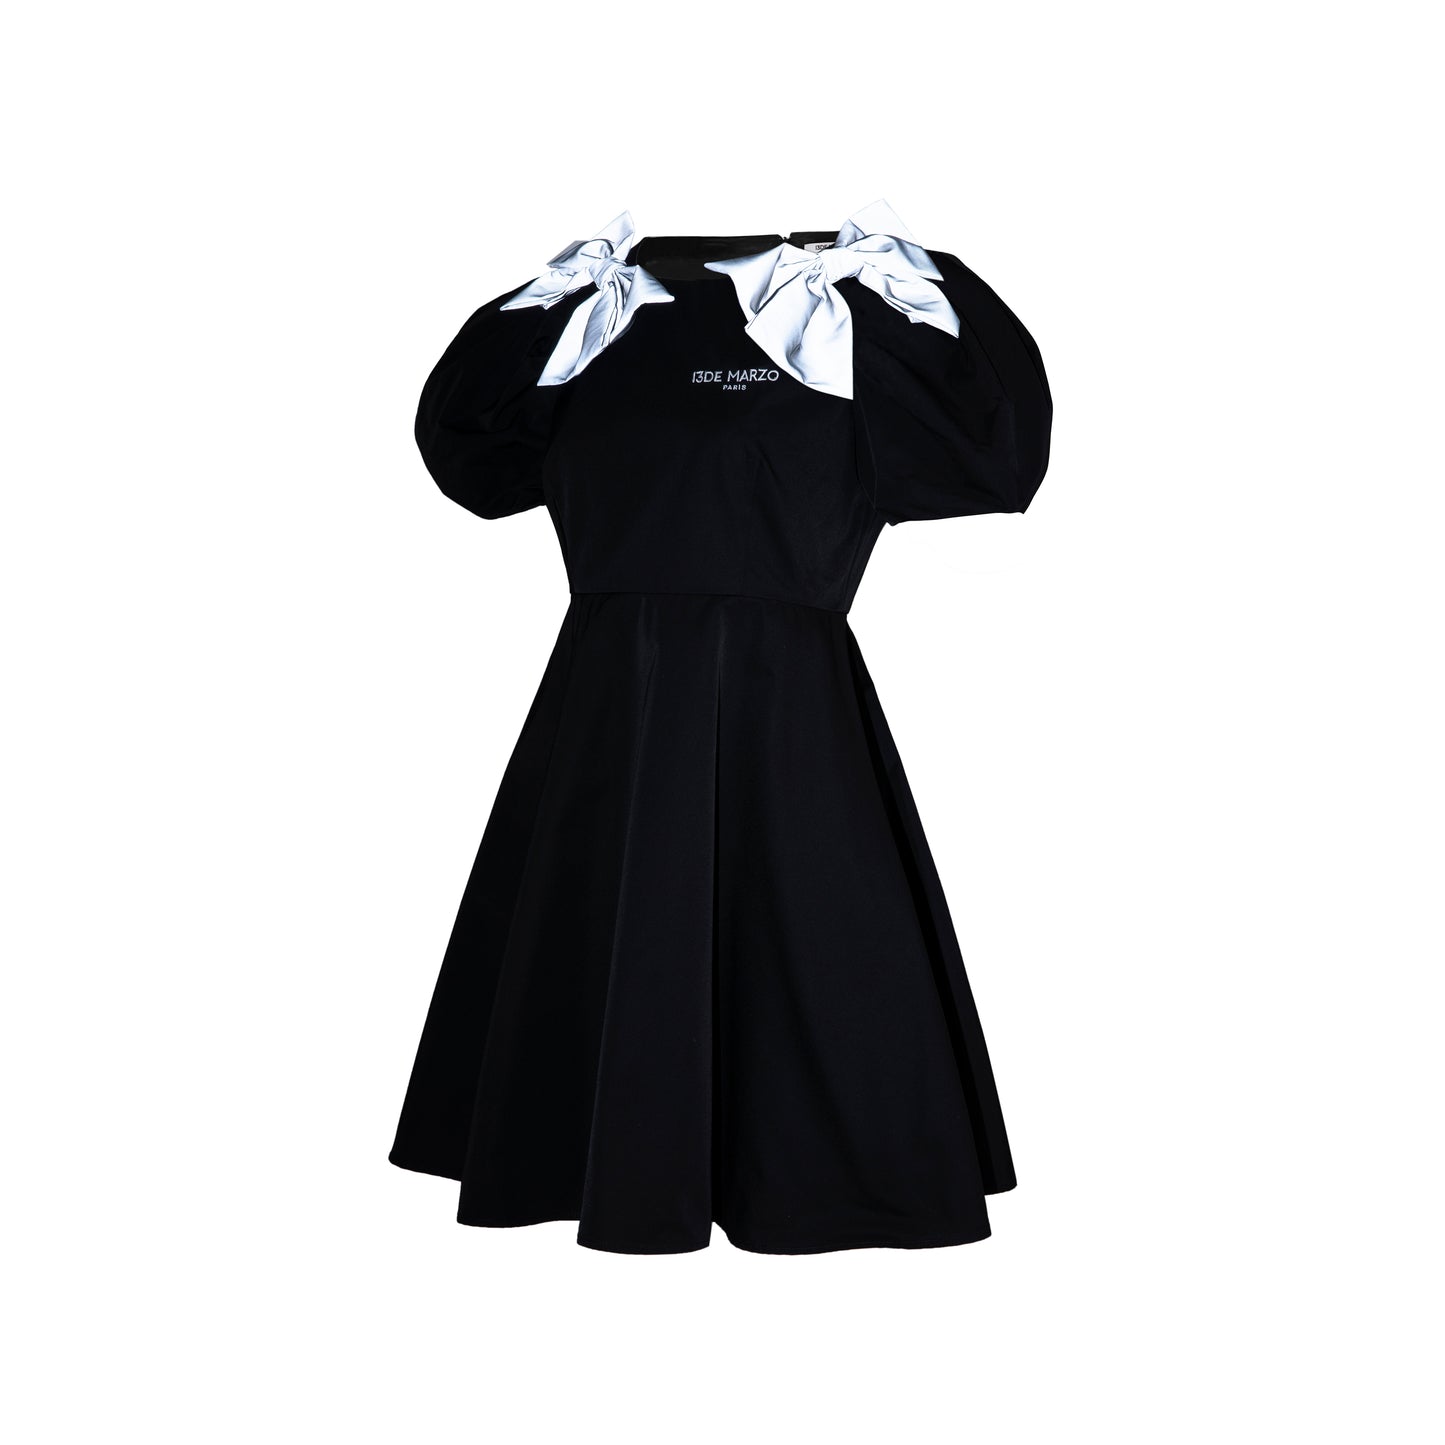 13DE MARZO 3M Reflect Bowknot Shirt Dress